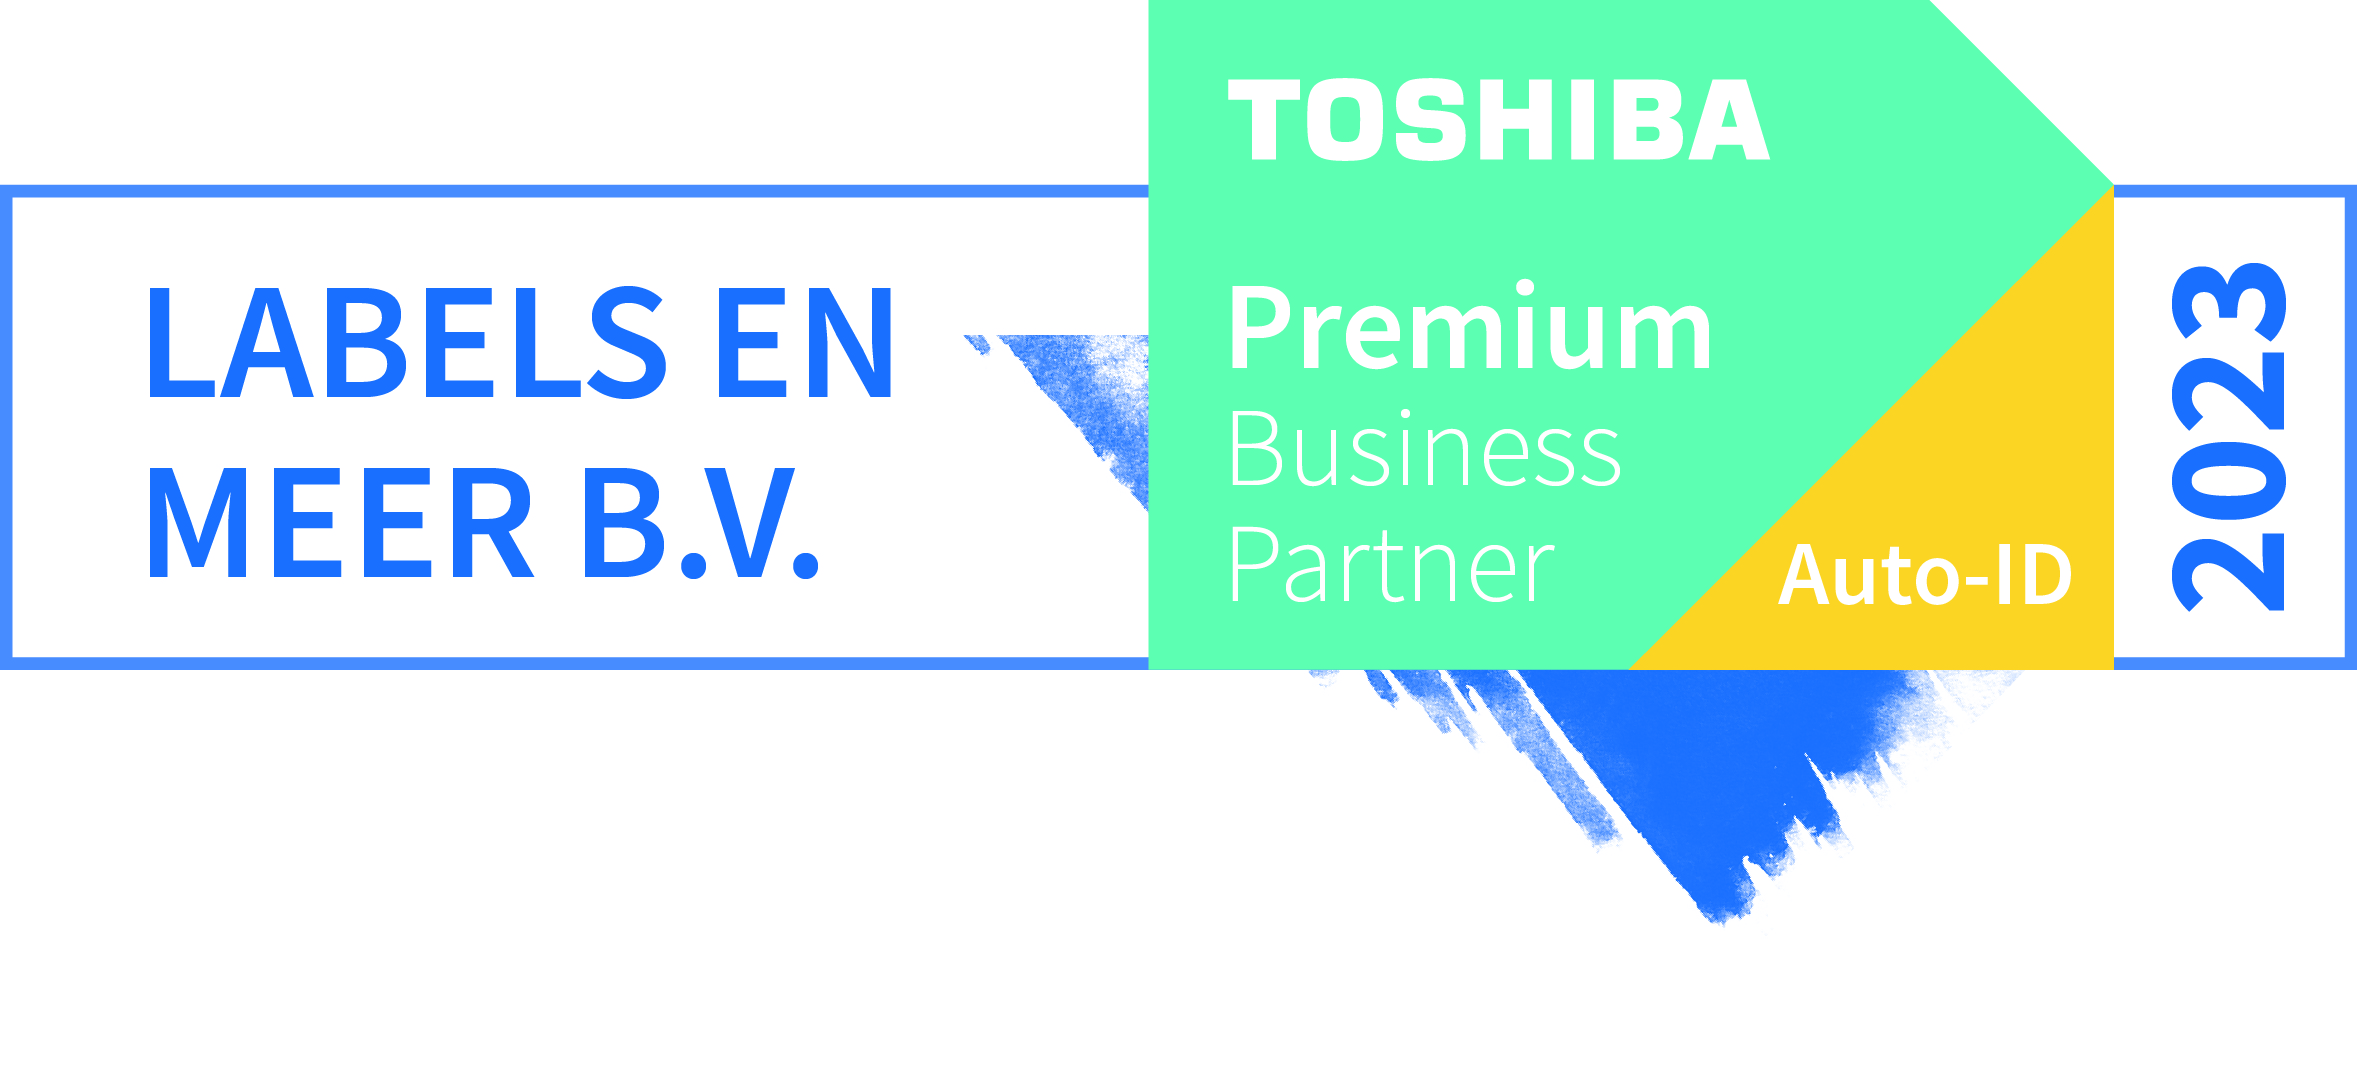 Business Partner logo_Premium_LABELS EN MEER BV